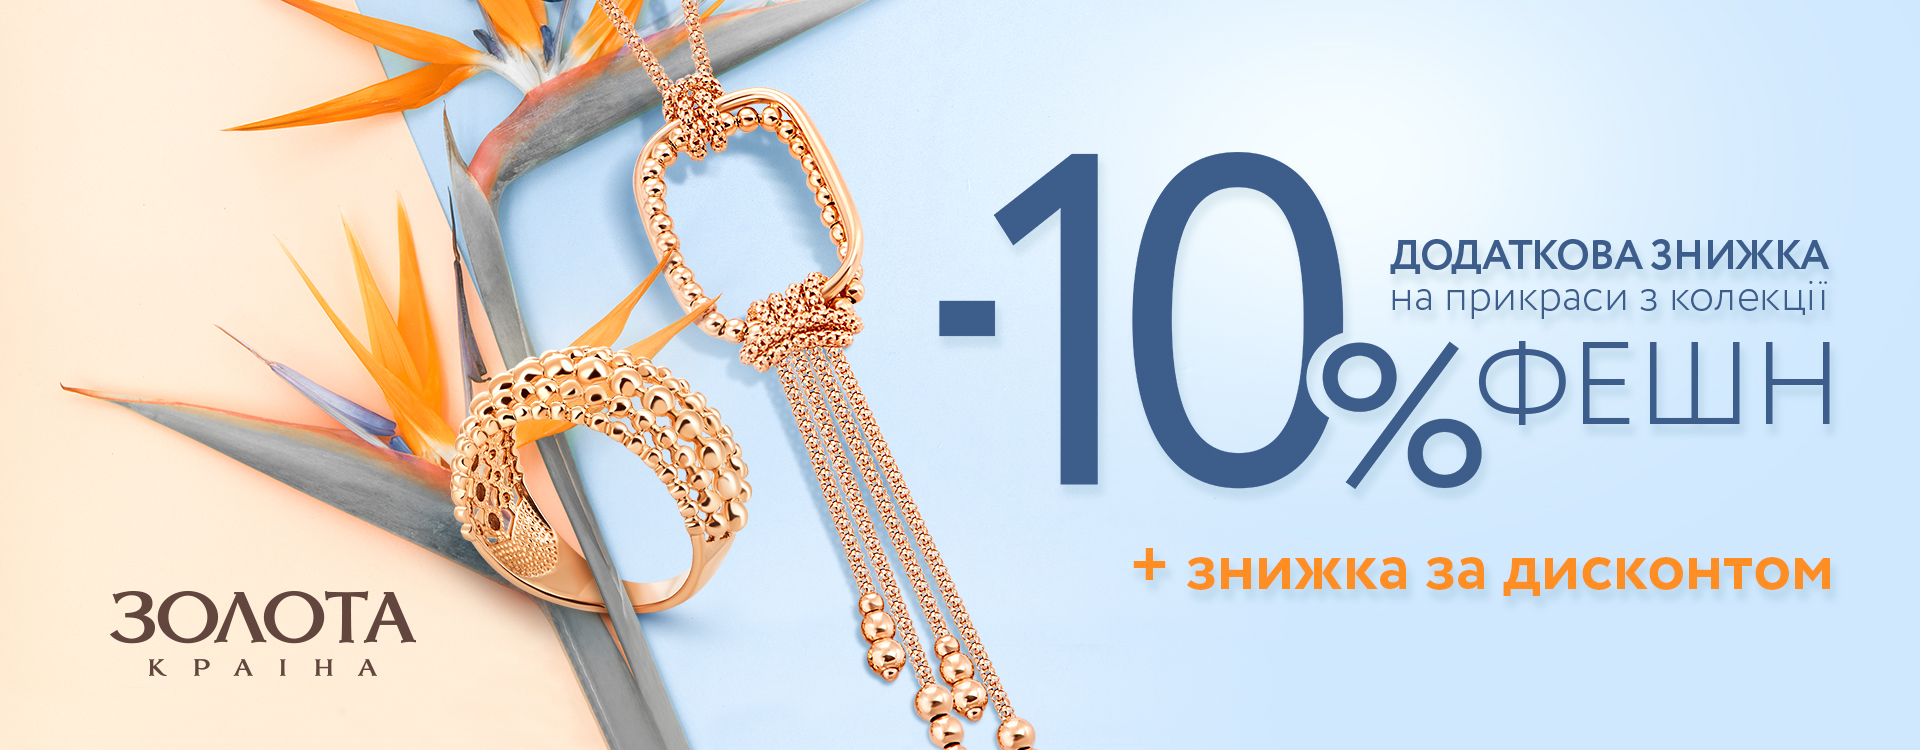 Additional discount -10% on jewelry in Zolota kraina